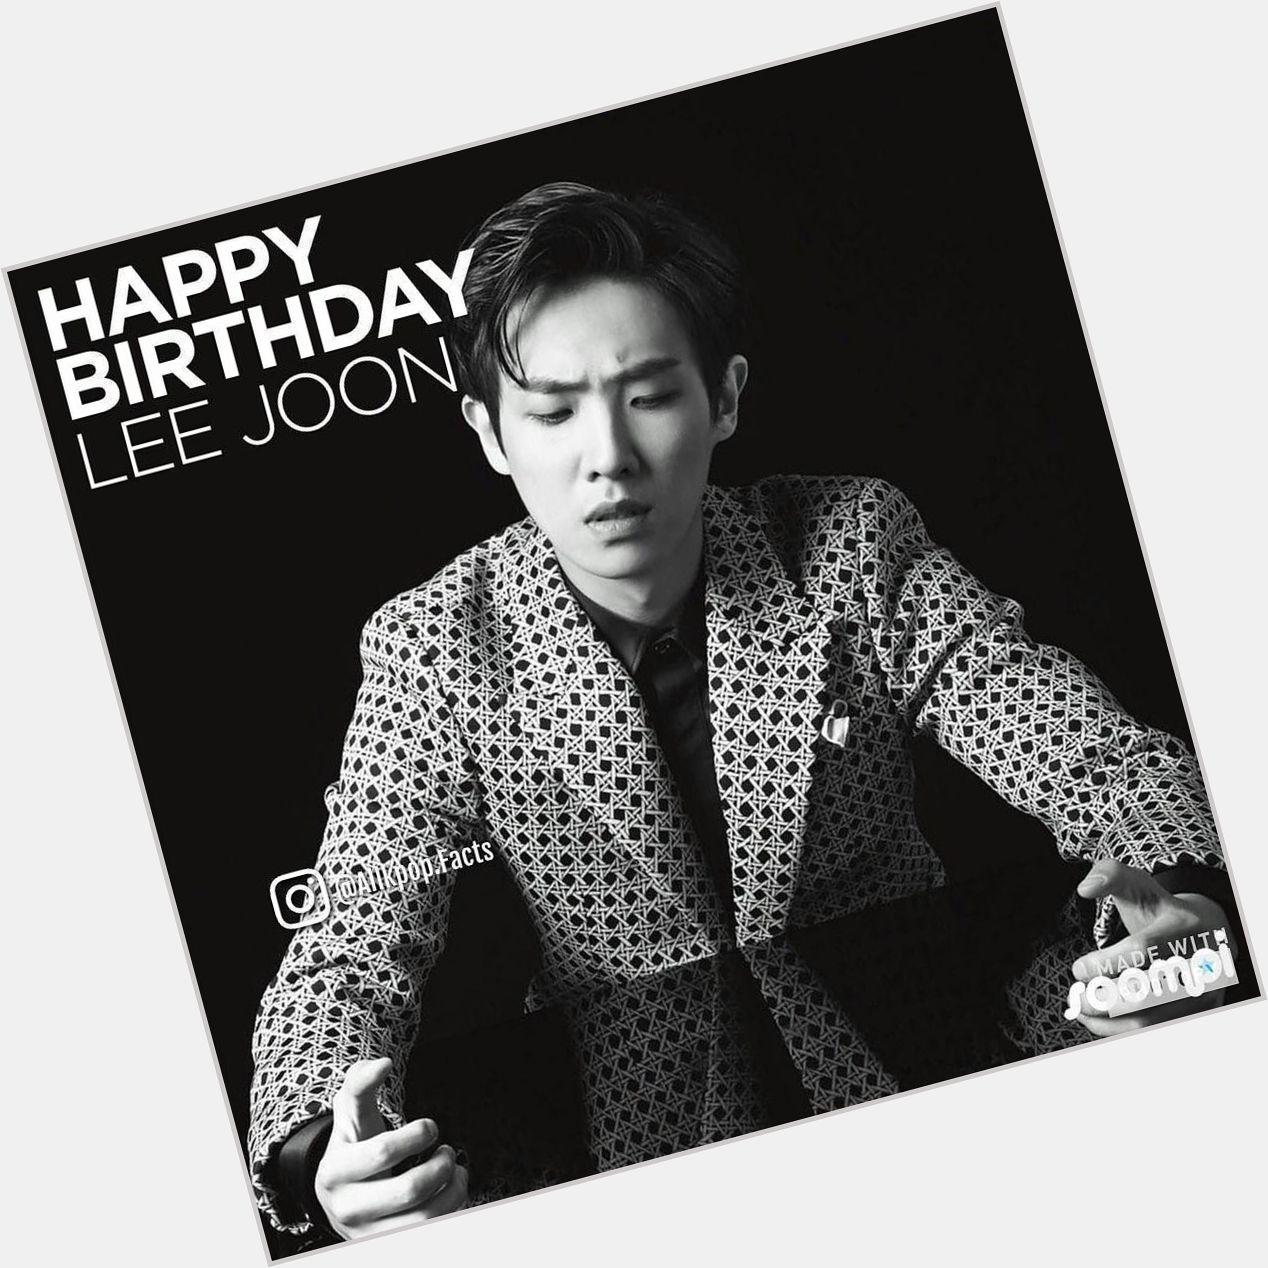 -
Happy Birthday to Lee Joon!  